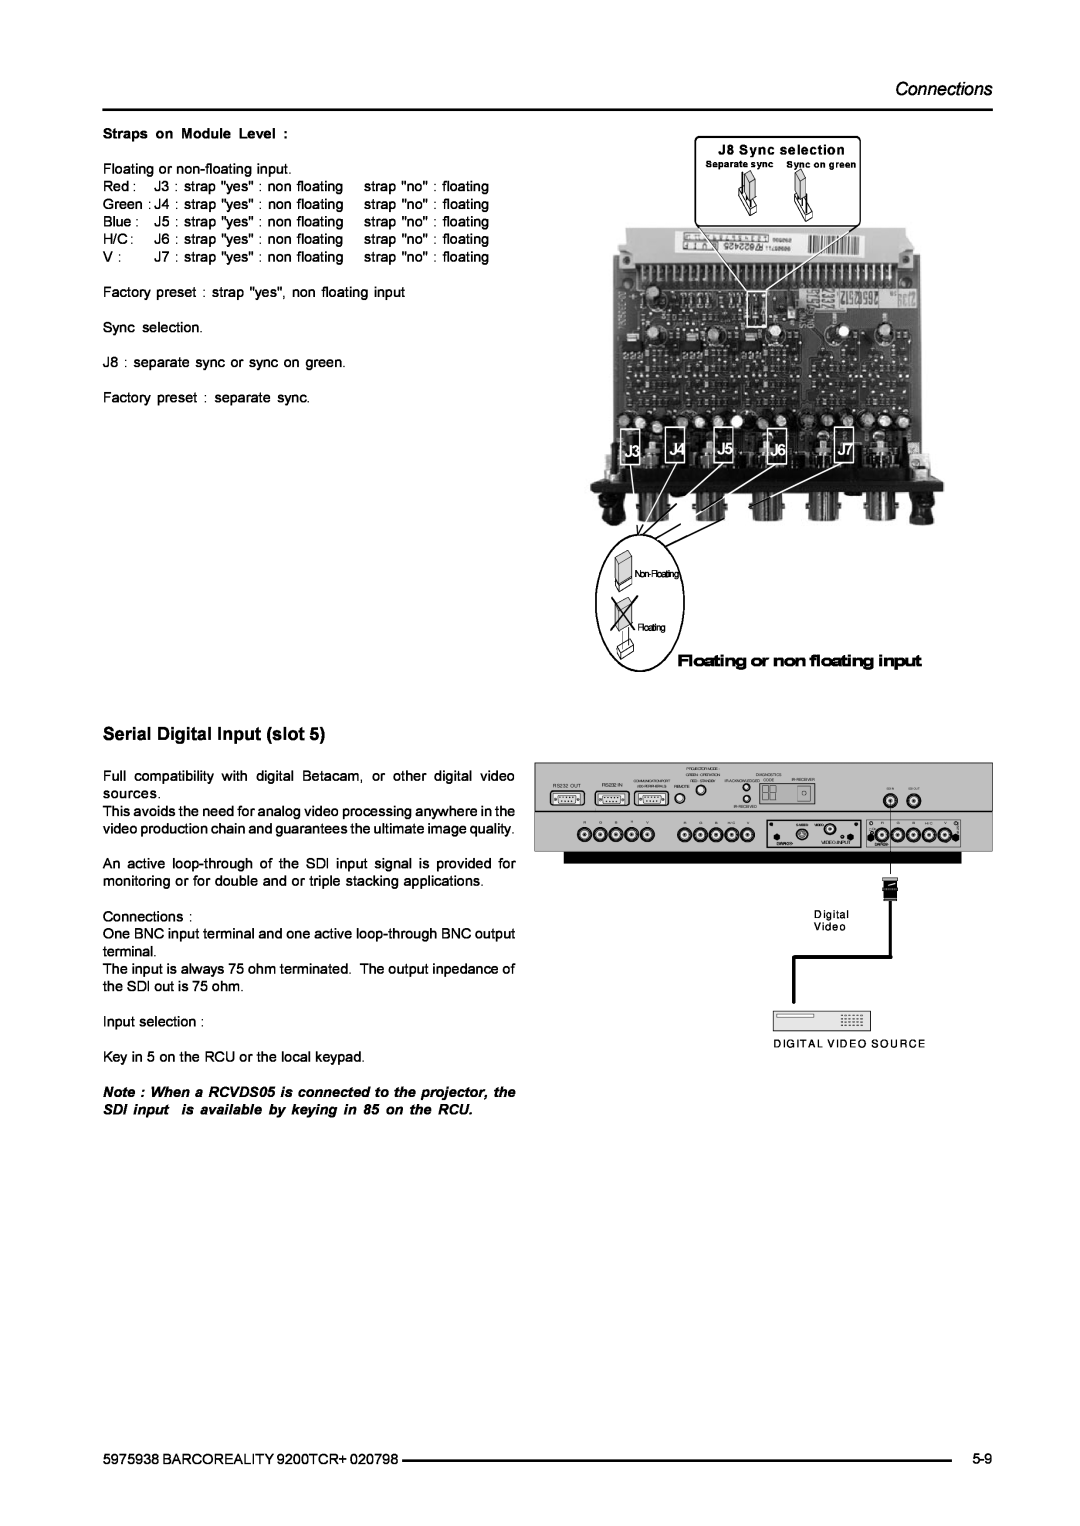 Barco R9001390 manual Serial Digital Input slot, Floating ORDWLQJRUQRQIORDWLQJLQSXW, Connections 